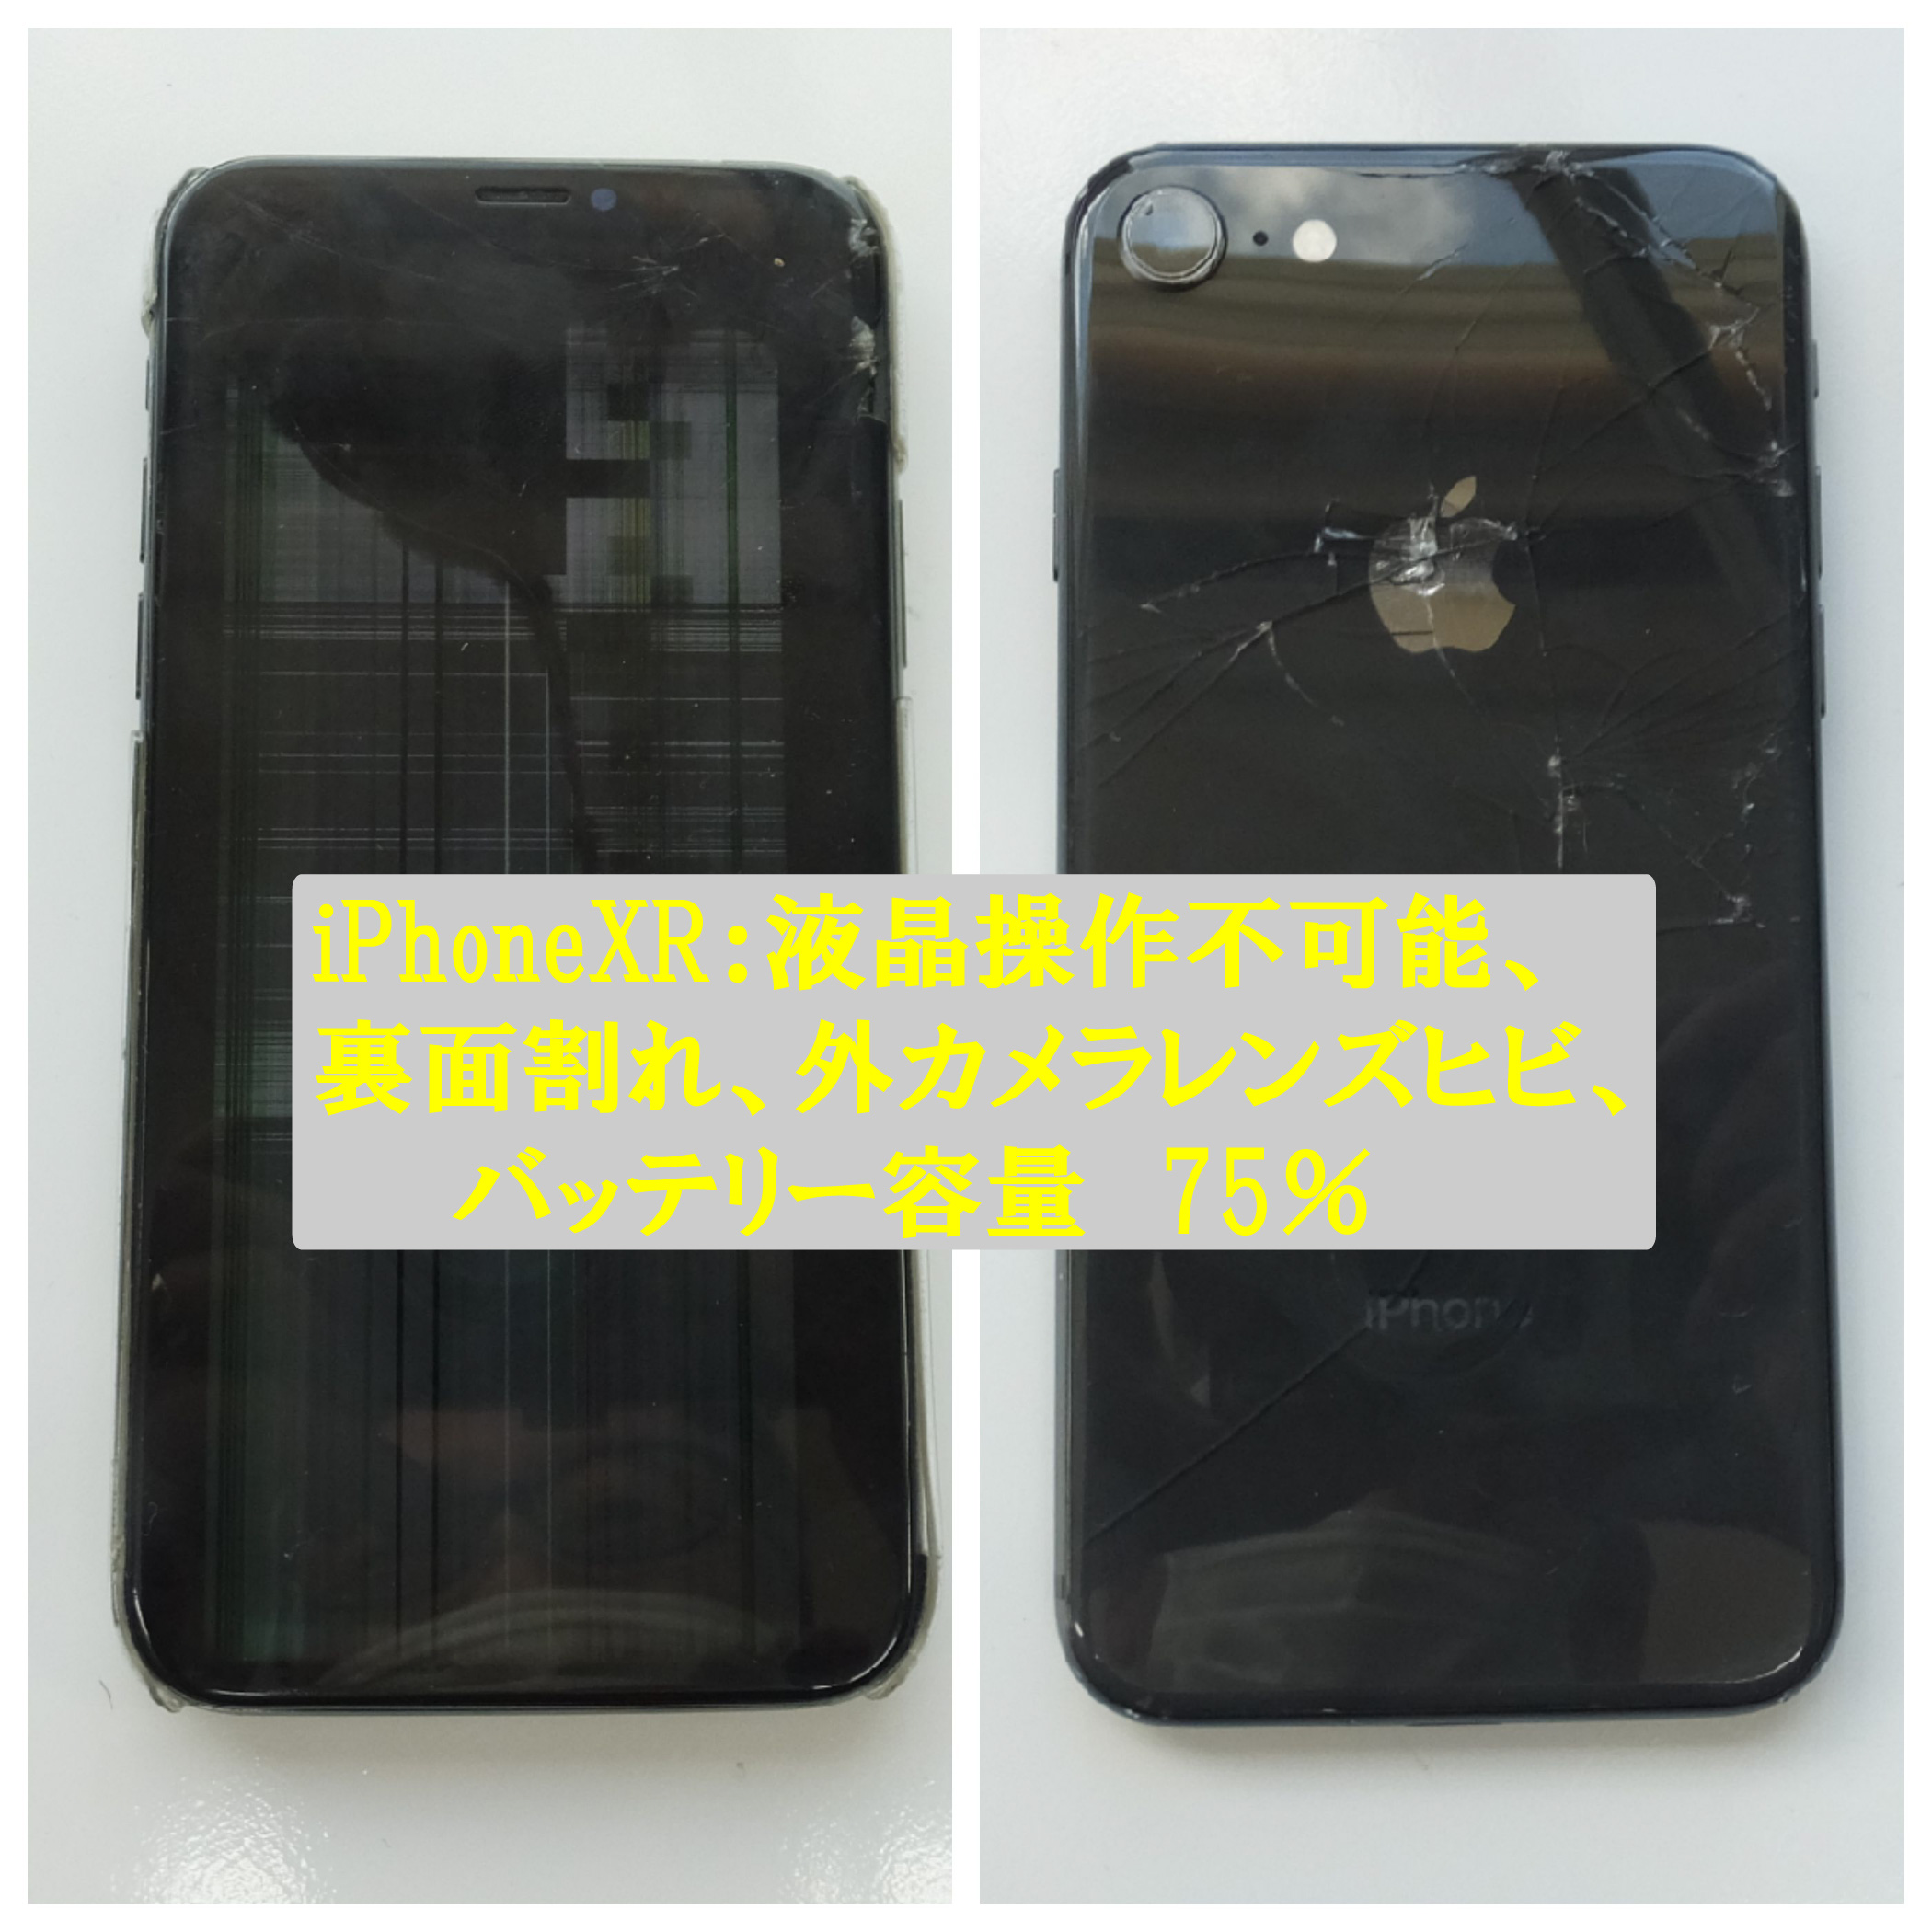 iPhone故障個所： 液晶画面操作不可、裏面割れ、外カメラレンズヒビ、バッテリー最大容量75%。